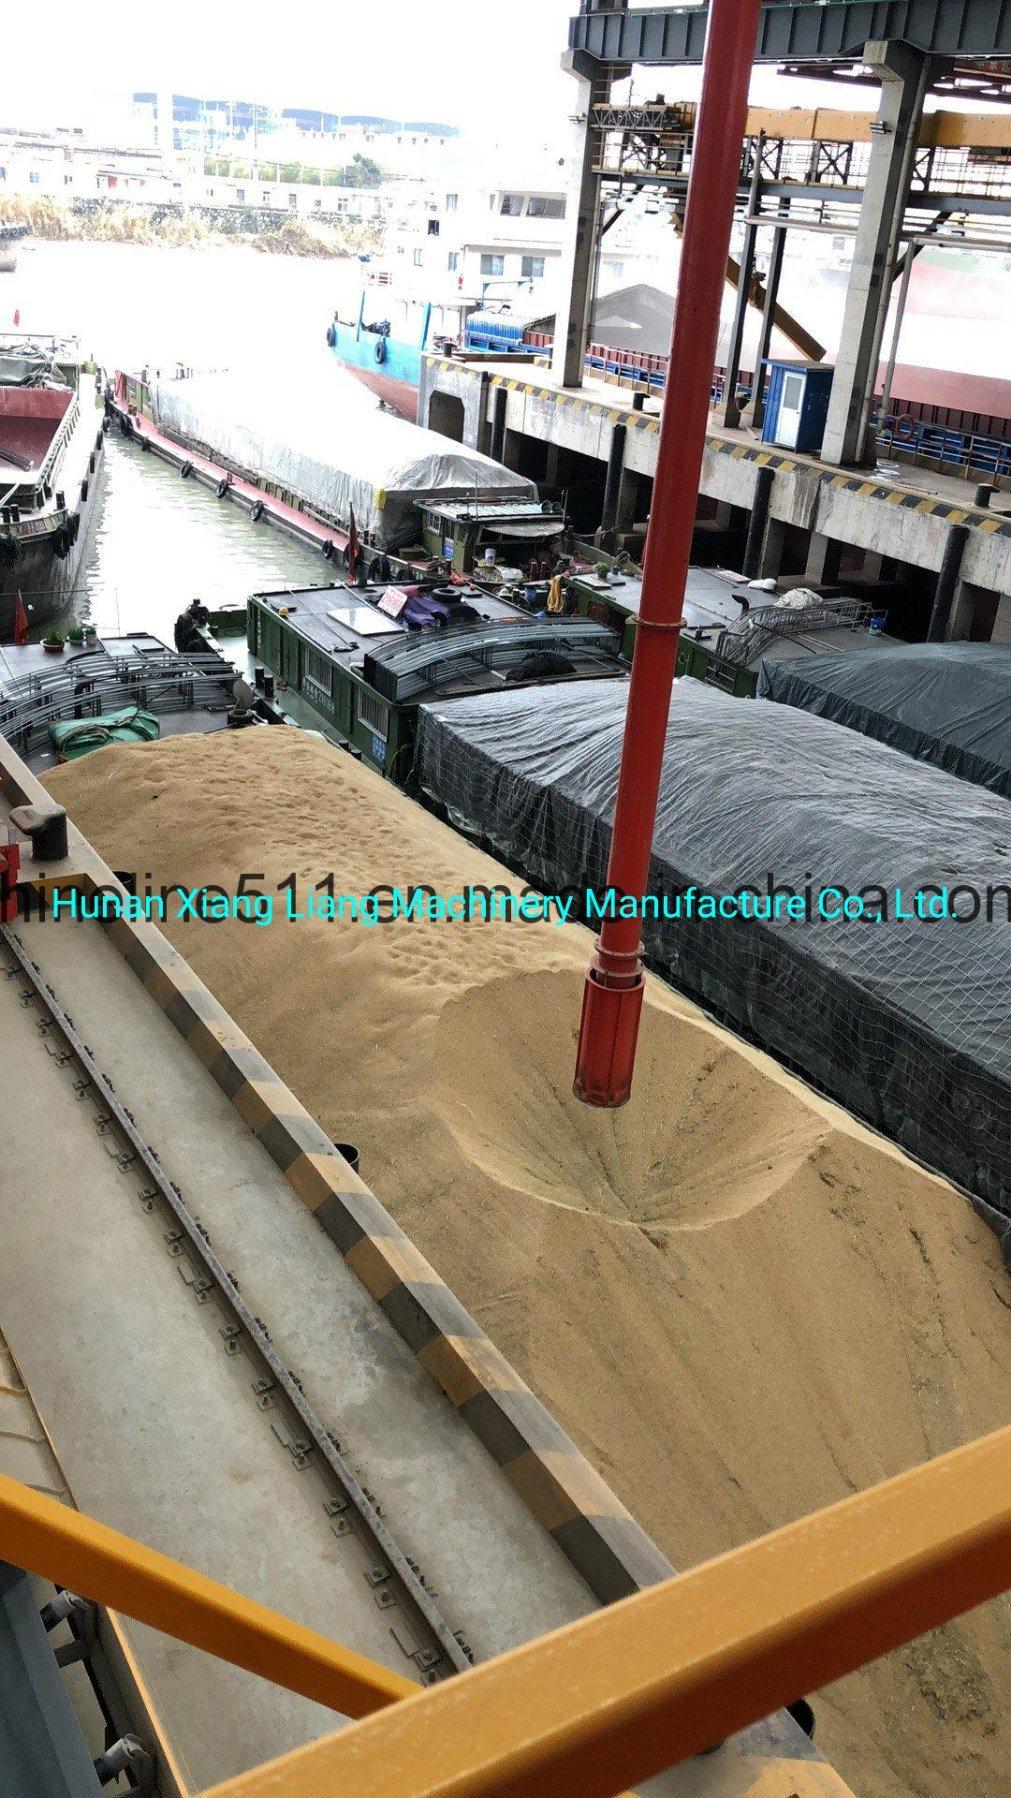 Granular Materials Heat Resistant Xiangliang Brand Gran Pump Ship Unloader